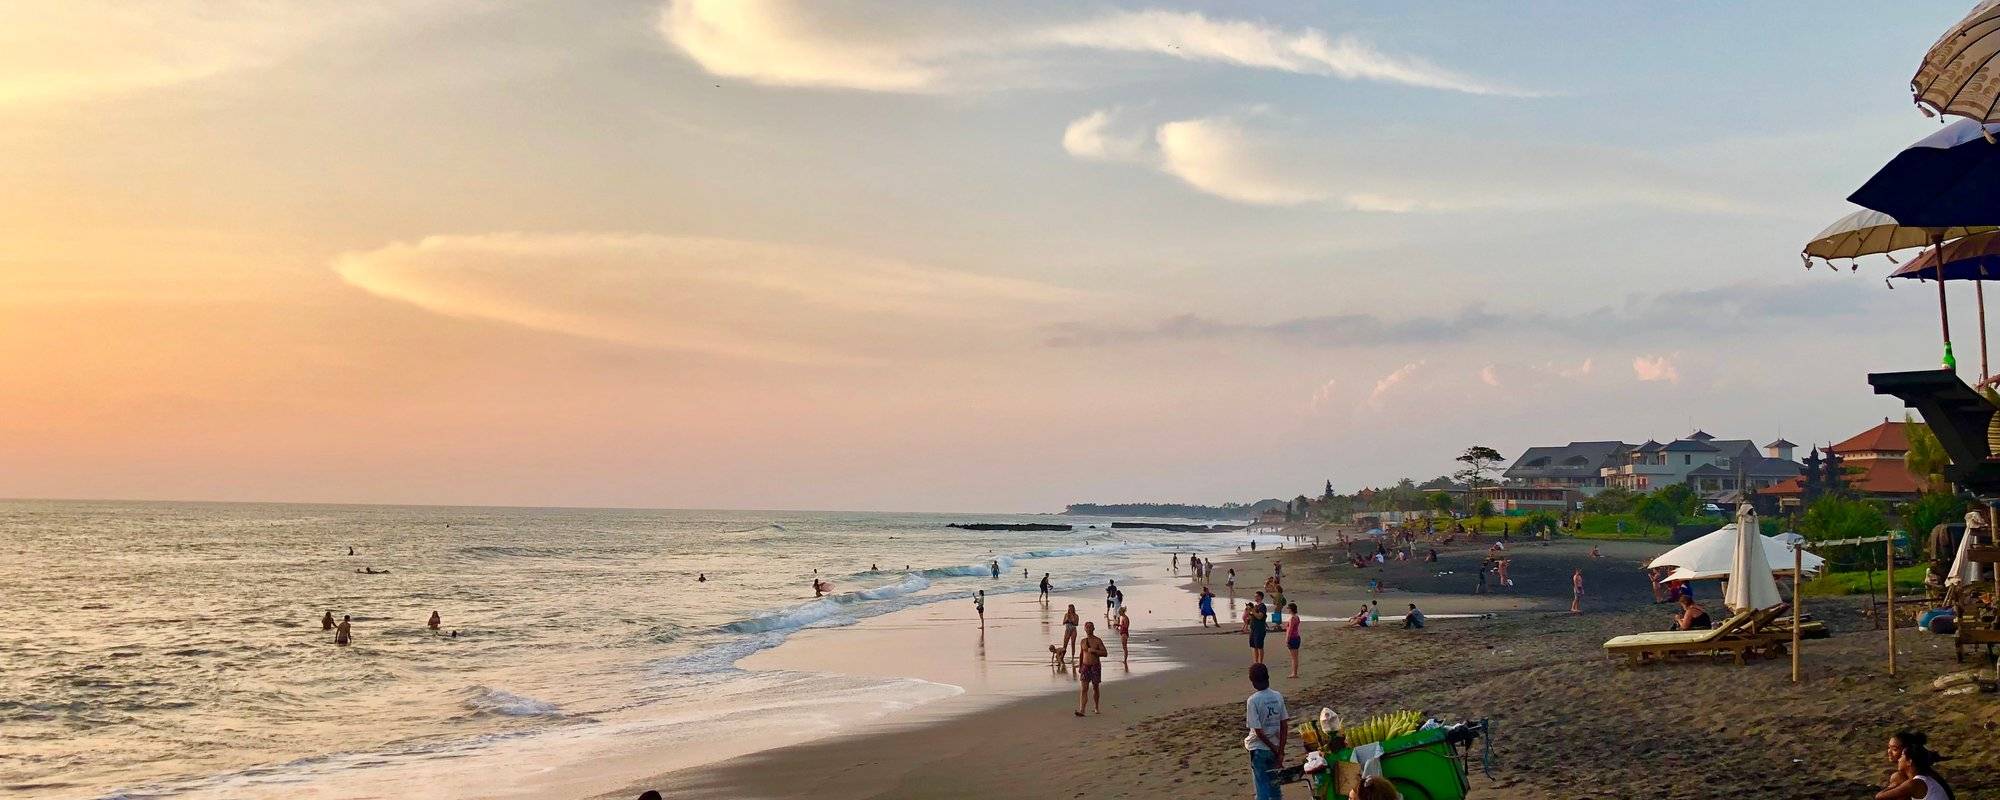 Bali - Surfers and Sunset at Pantai Batu Bolong